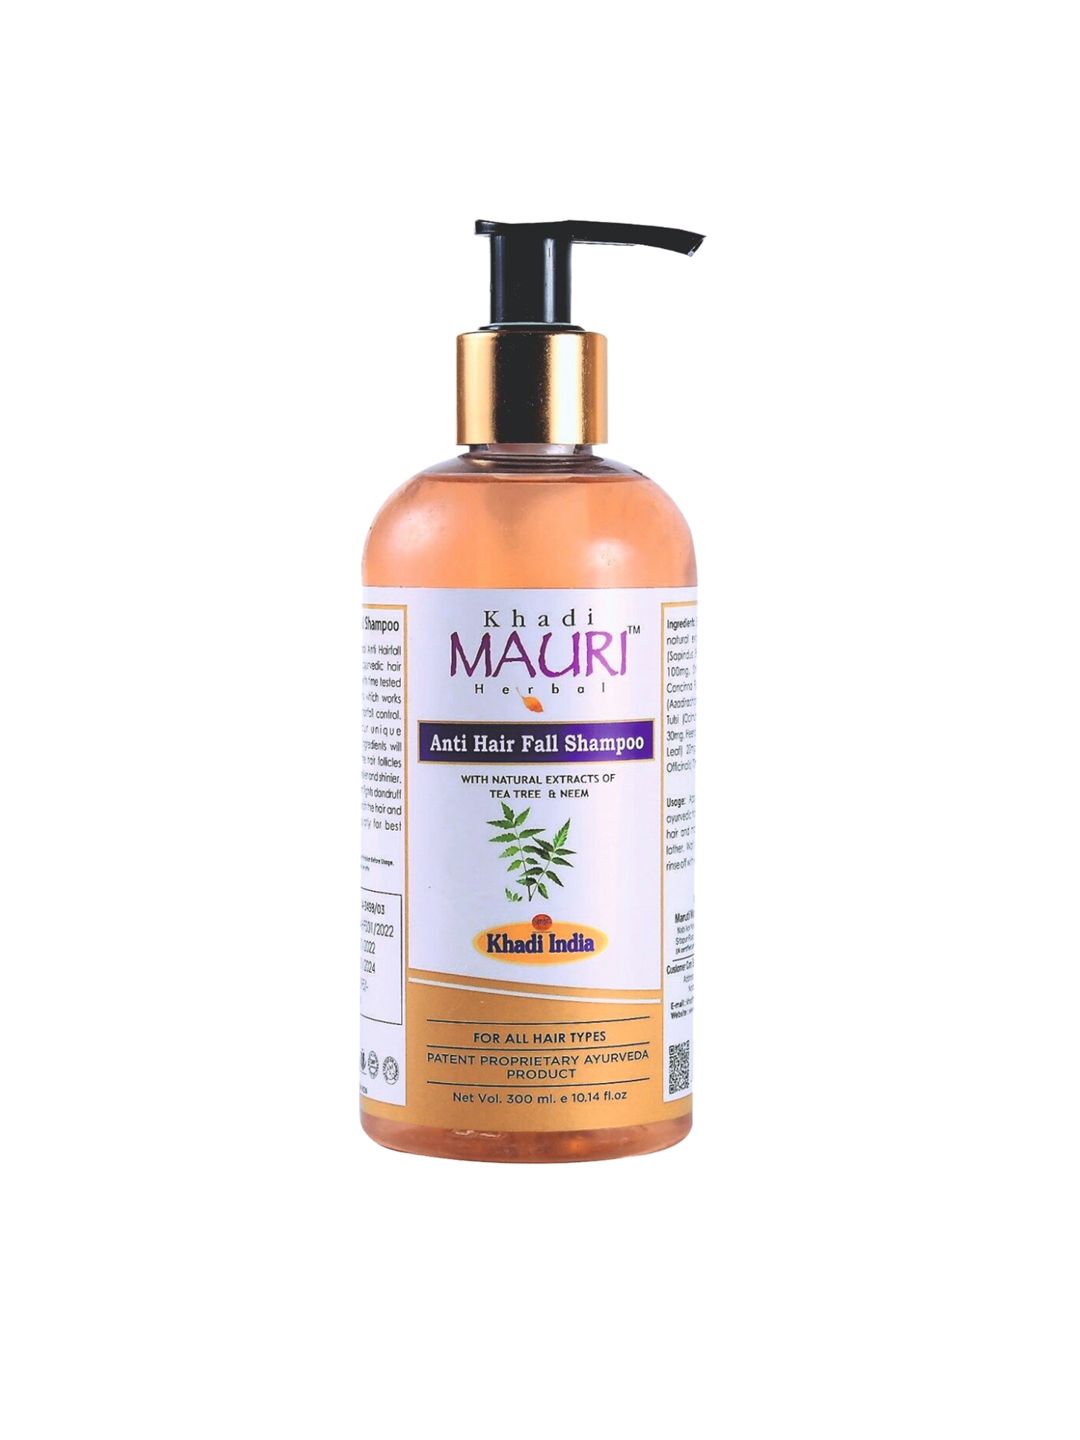 Khadi Mauri Herbal Anti Hair Fall Shampoo with Tea Tree & Neem - 300 ml Price in India